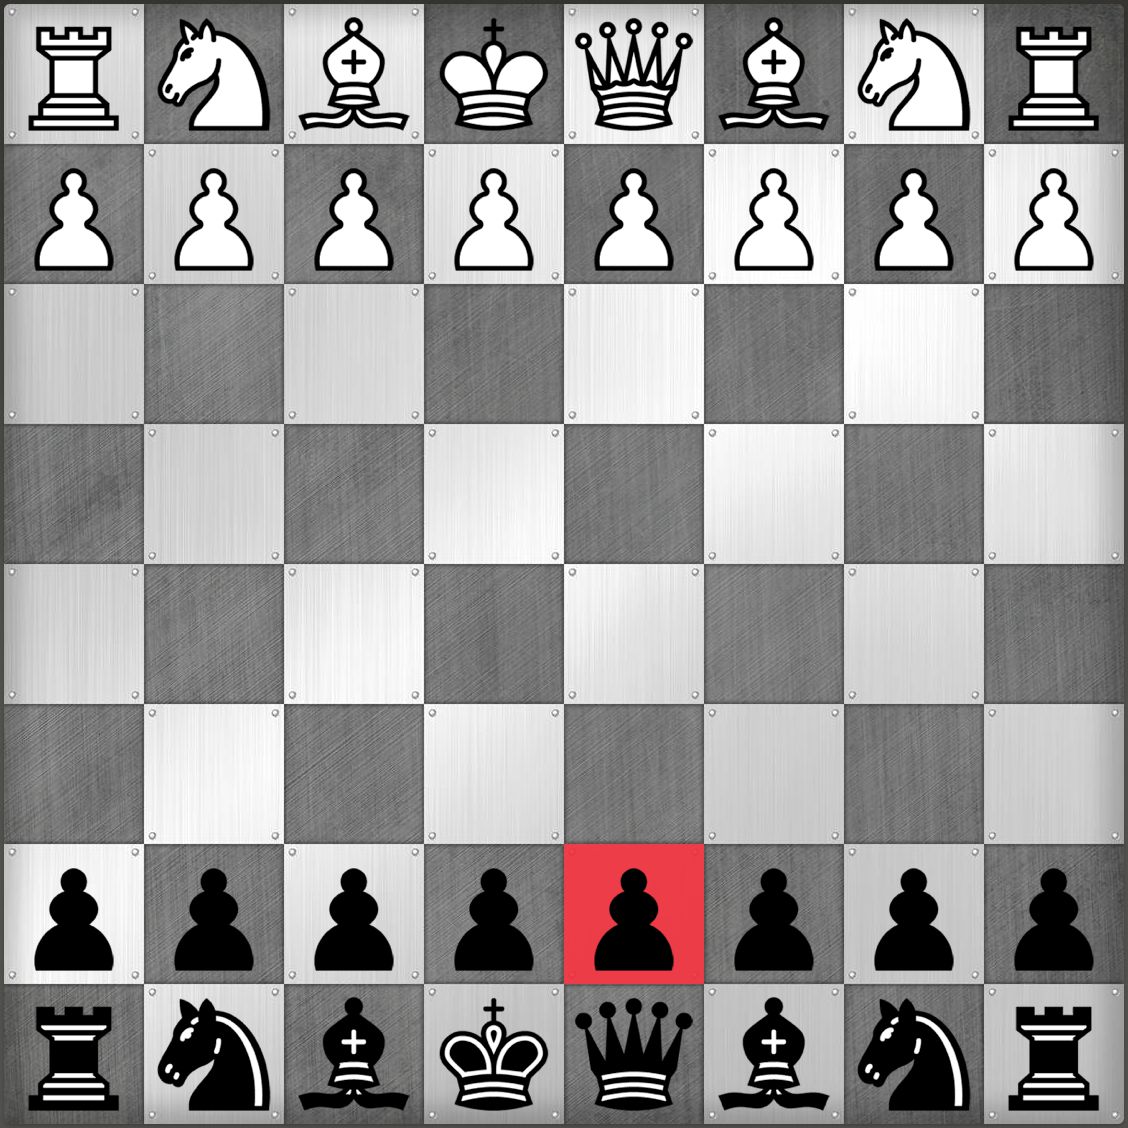 Chess Board Coordinates - AnkiWeb